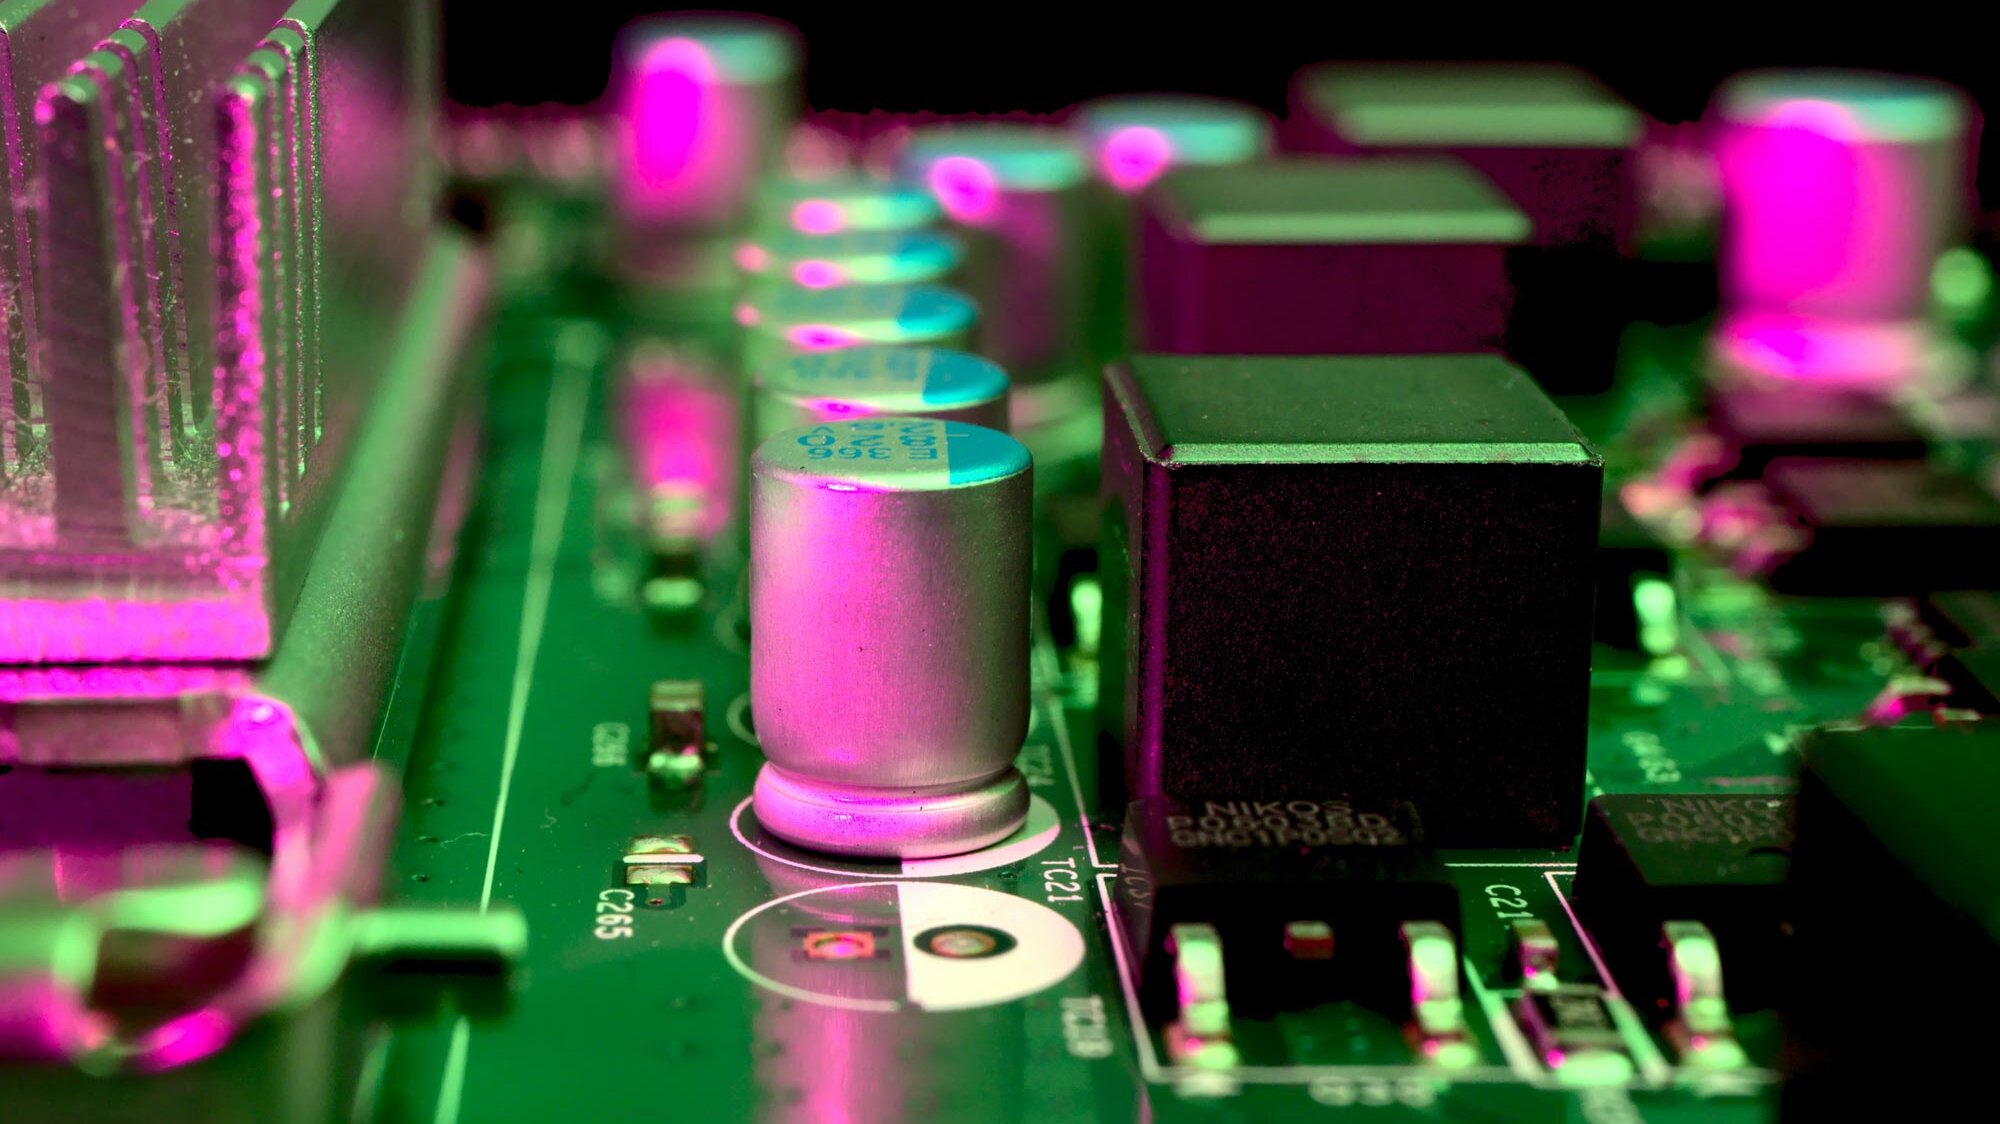 https://unsplash.com/photos/deHhHOttSdk Fine Vacuum; Close up green and purple circuit board